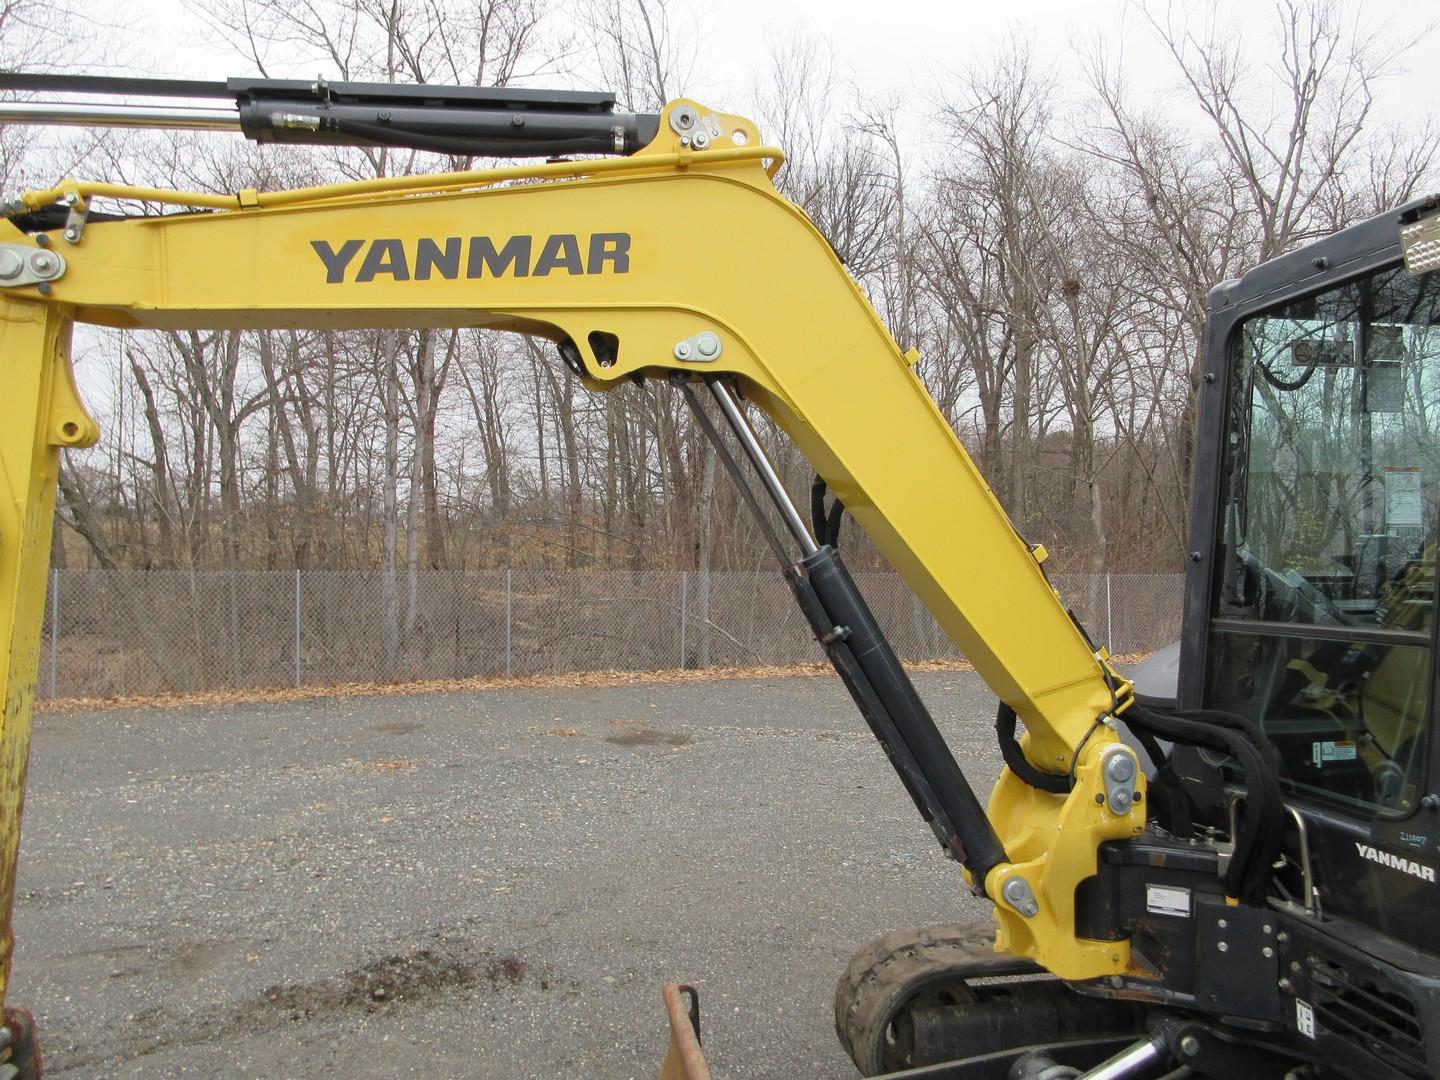 2018 Yanmar Vio50-6A Mini Excavator